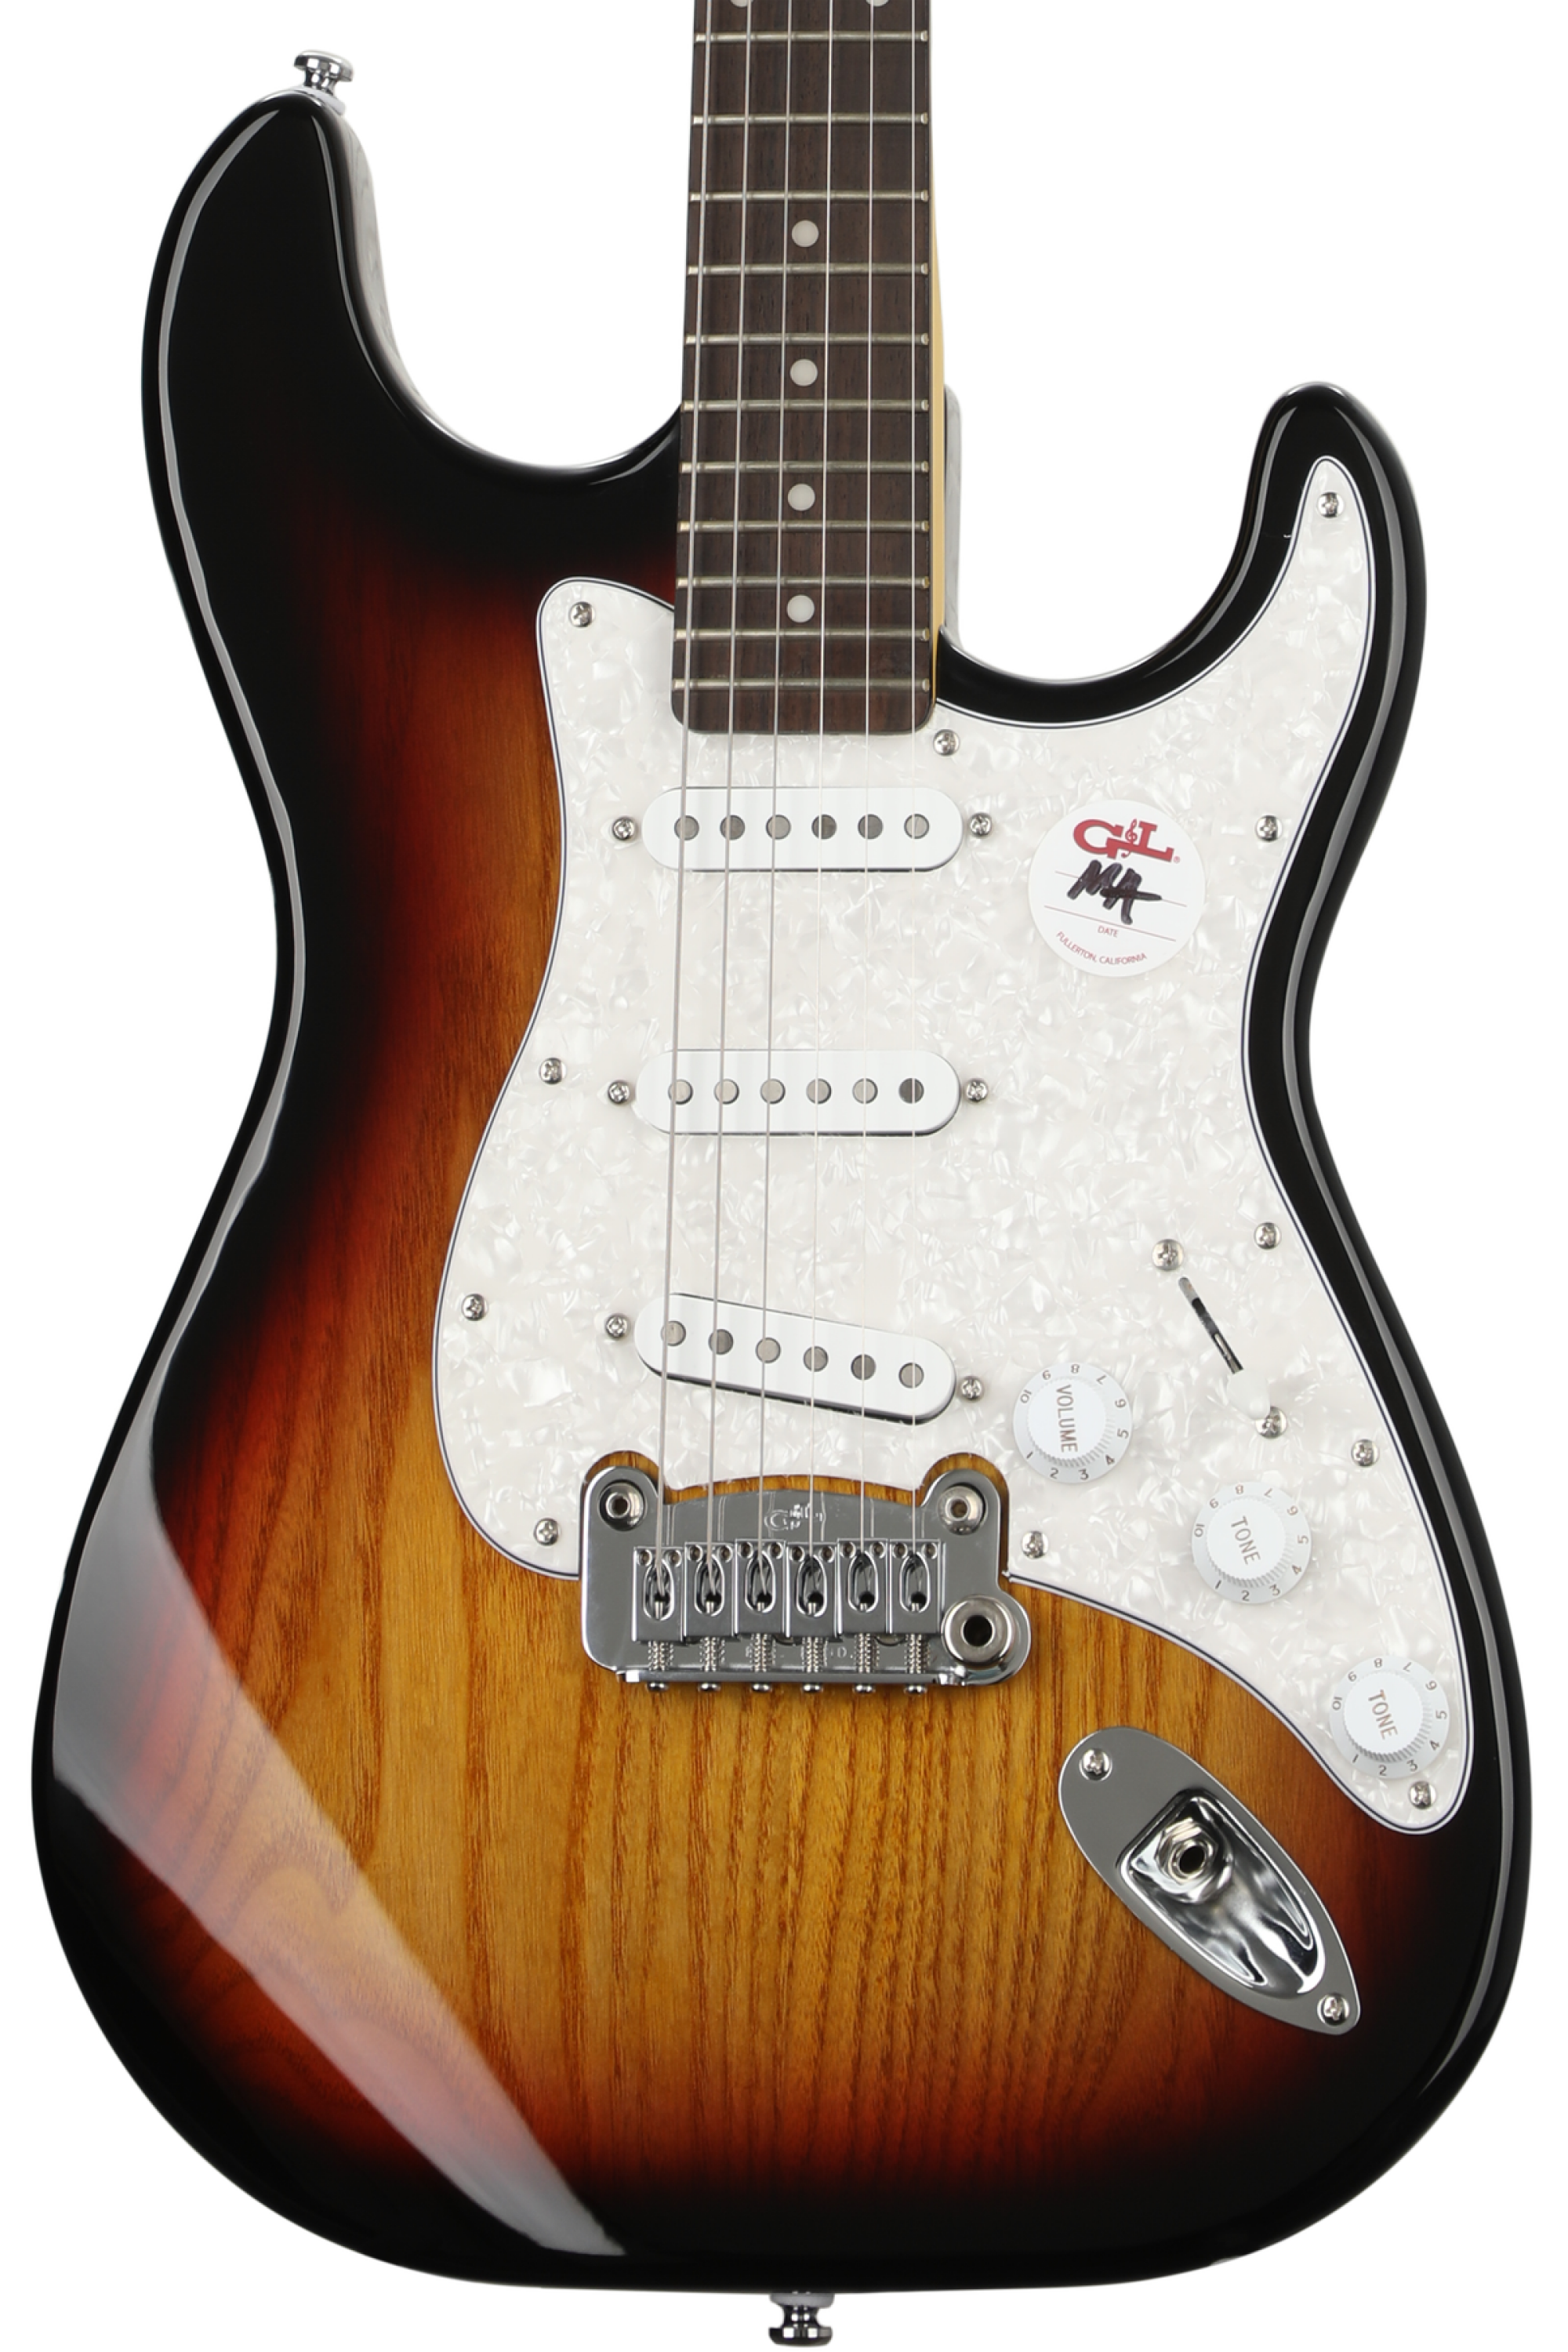 G&L Tribute Legacy Electric Guitar - 3-tone Sunburst | Sweetwater